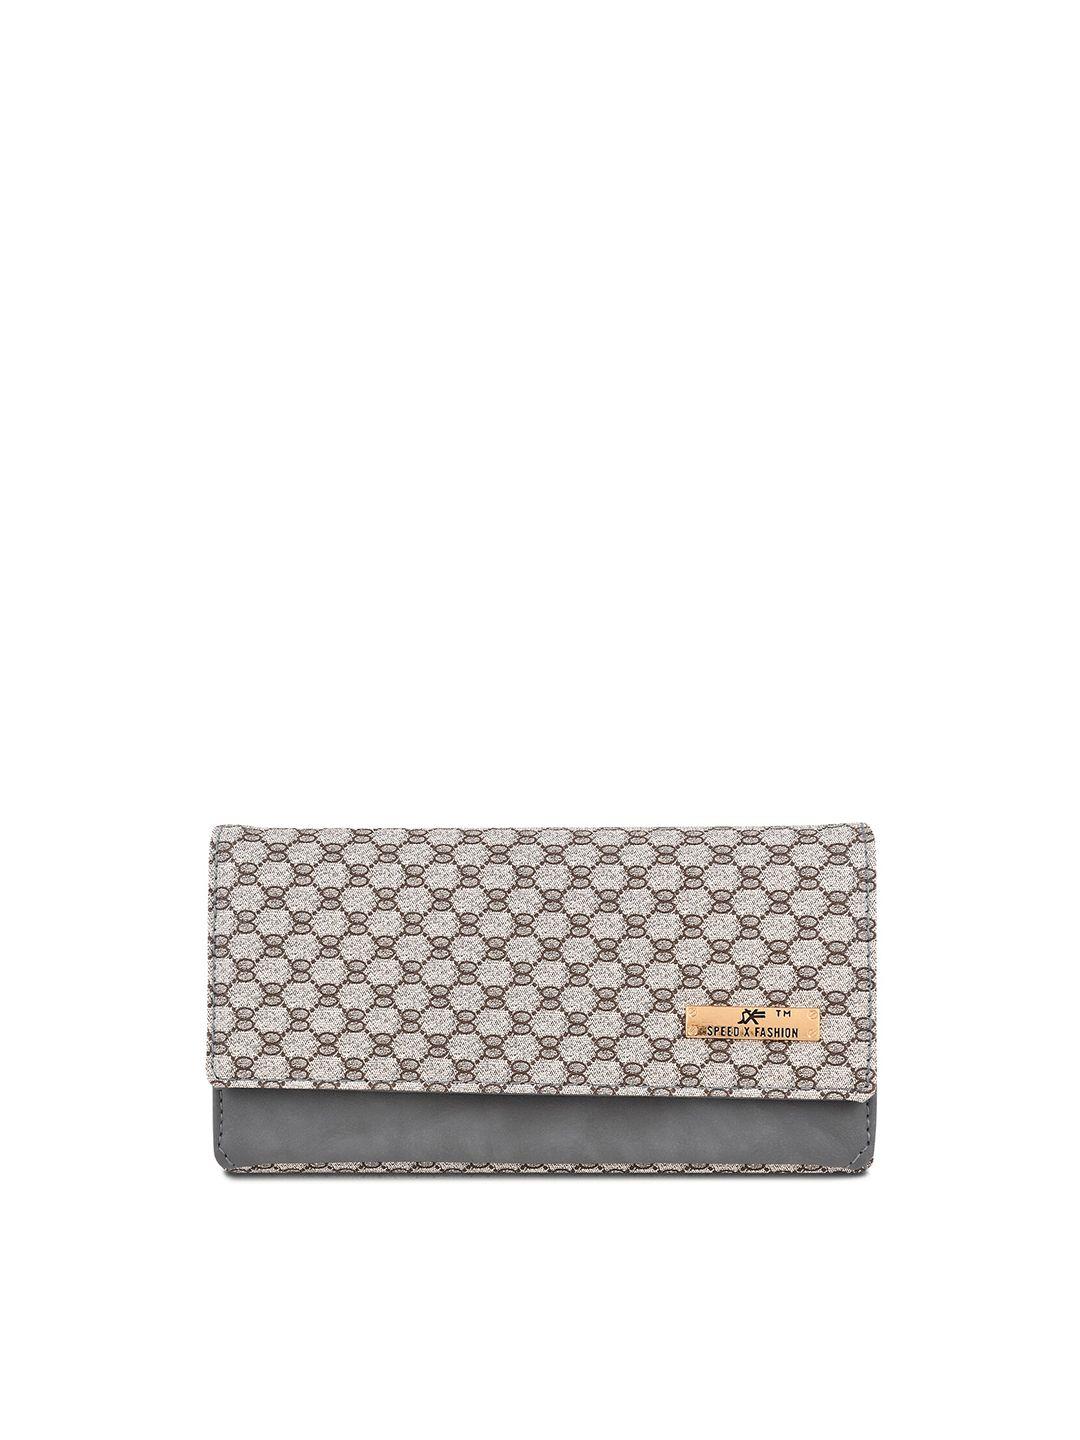 sxf speed x fashion grey & brown checked purse clutch